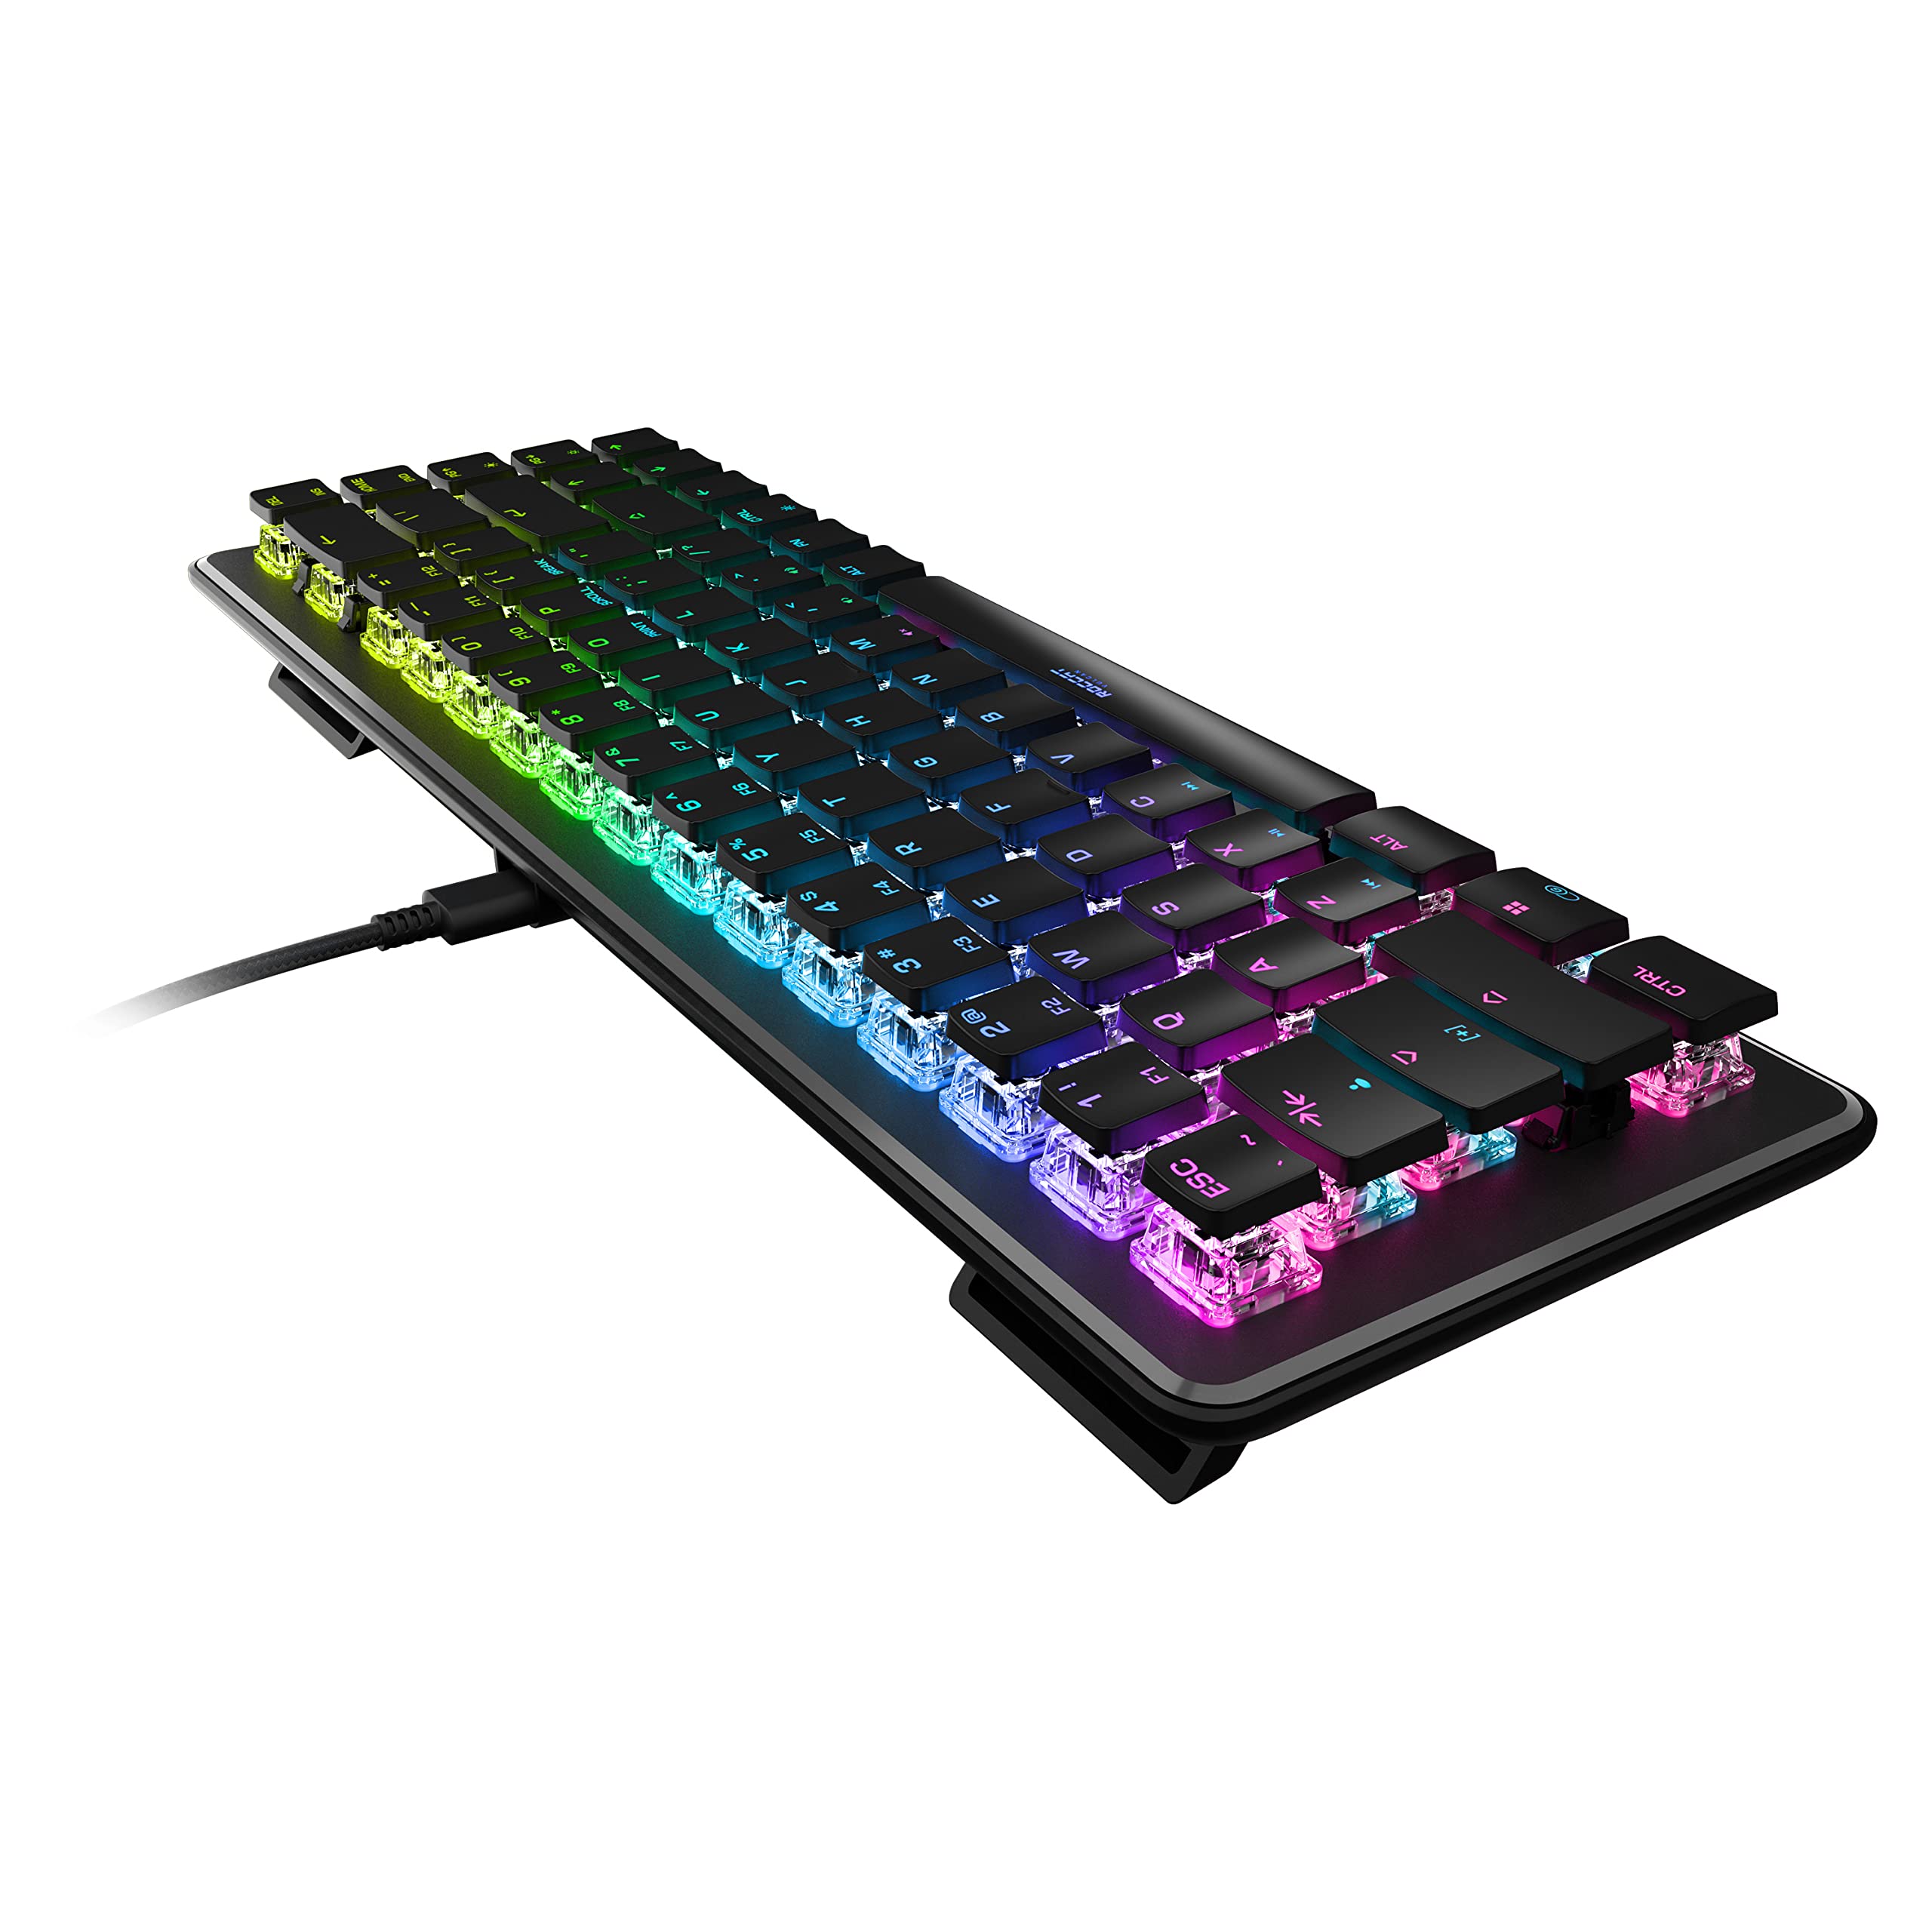 ROCCAT USB Vulcan II Mini – 65% Optical PC Gaming Keyboard with Customizable RGB Illumination, Detachable Cable, Button Duplicator, Aluminum Plate, 100M Keystroke Durability - Black (ROC-12-043)